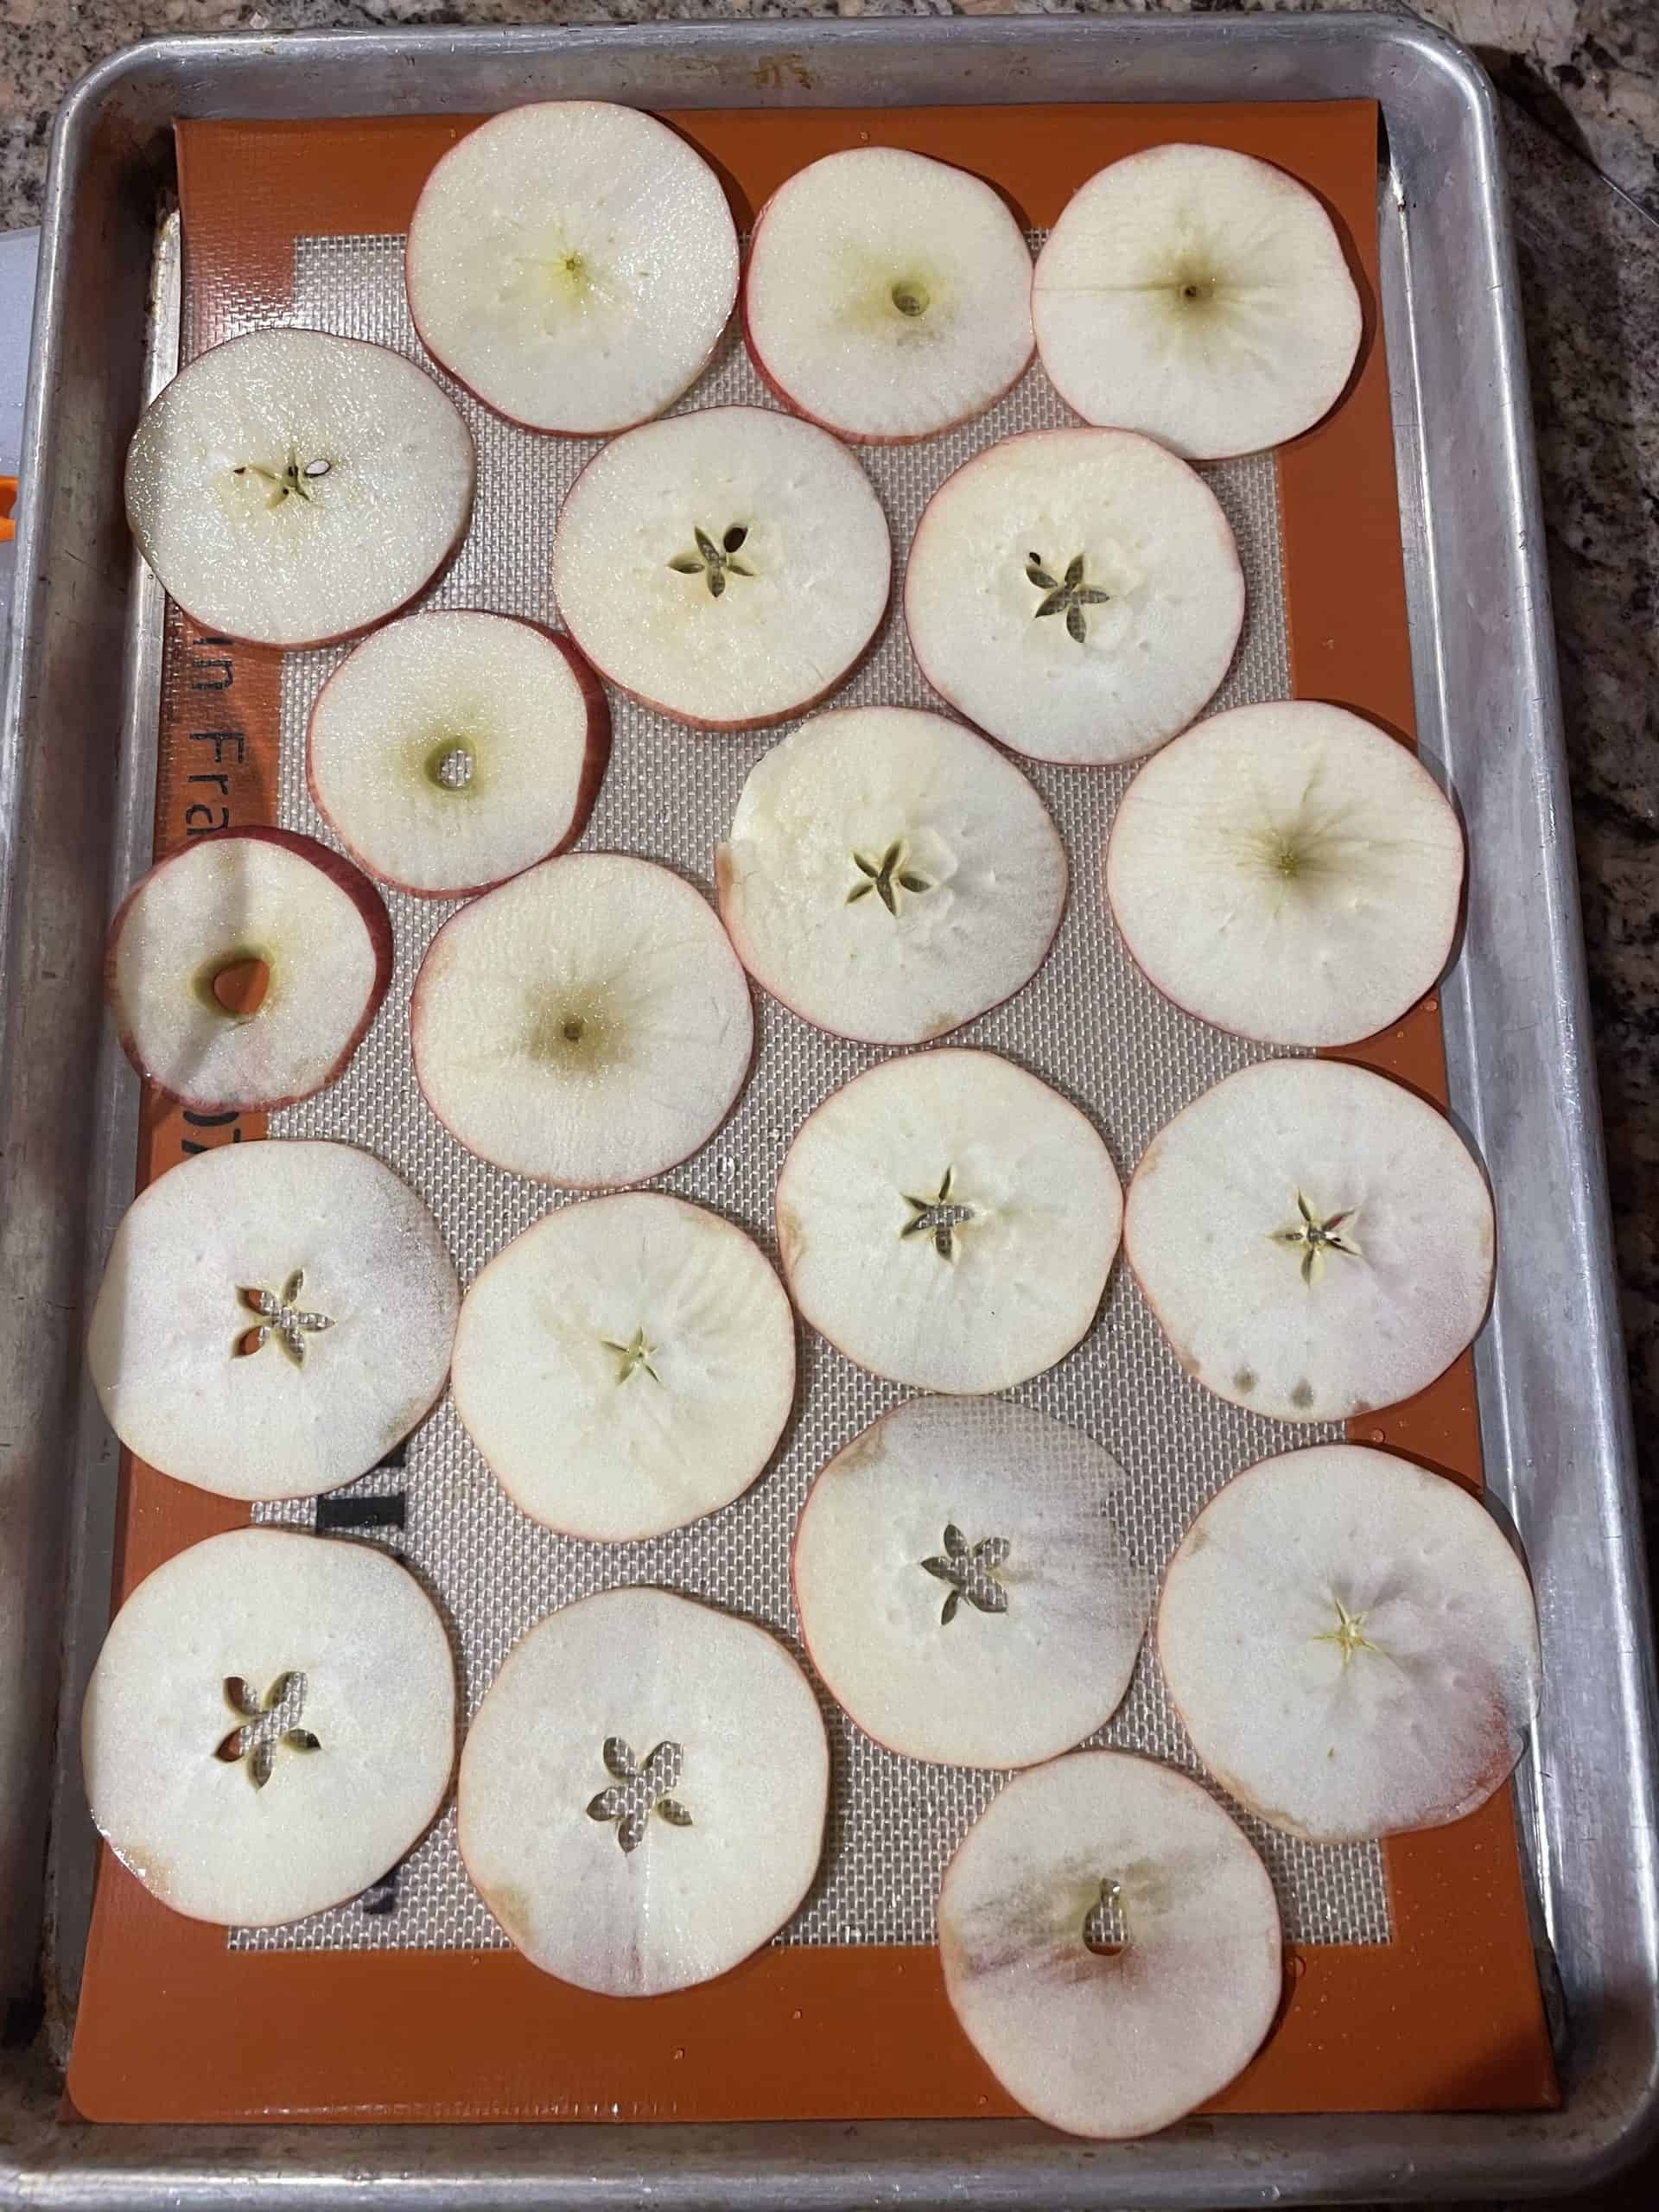 formeel Geboorteplaats kleuring Best Dried Apples - From Michigan To The Table